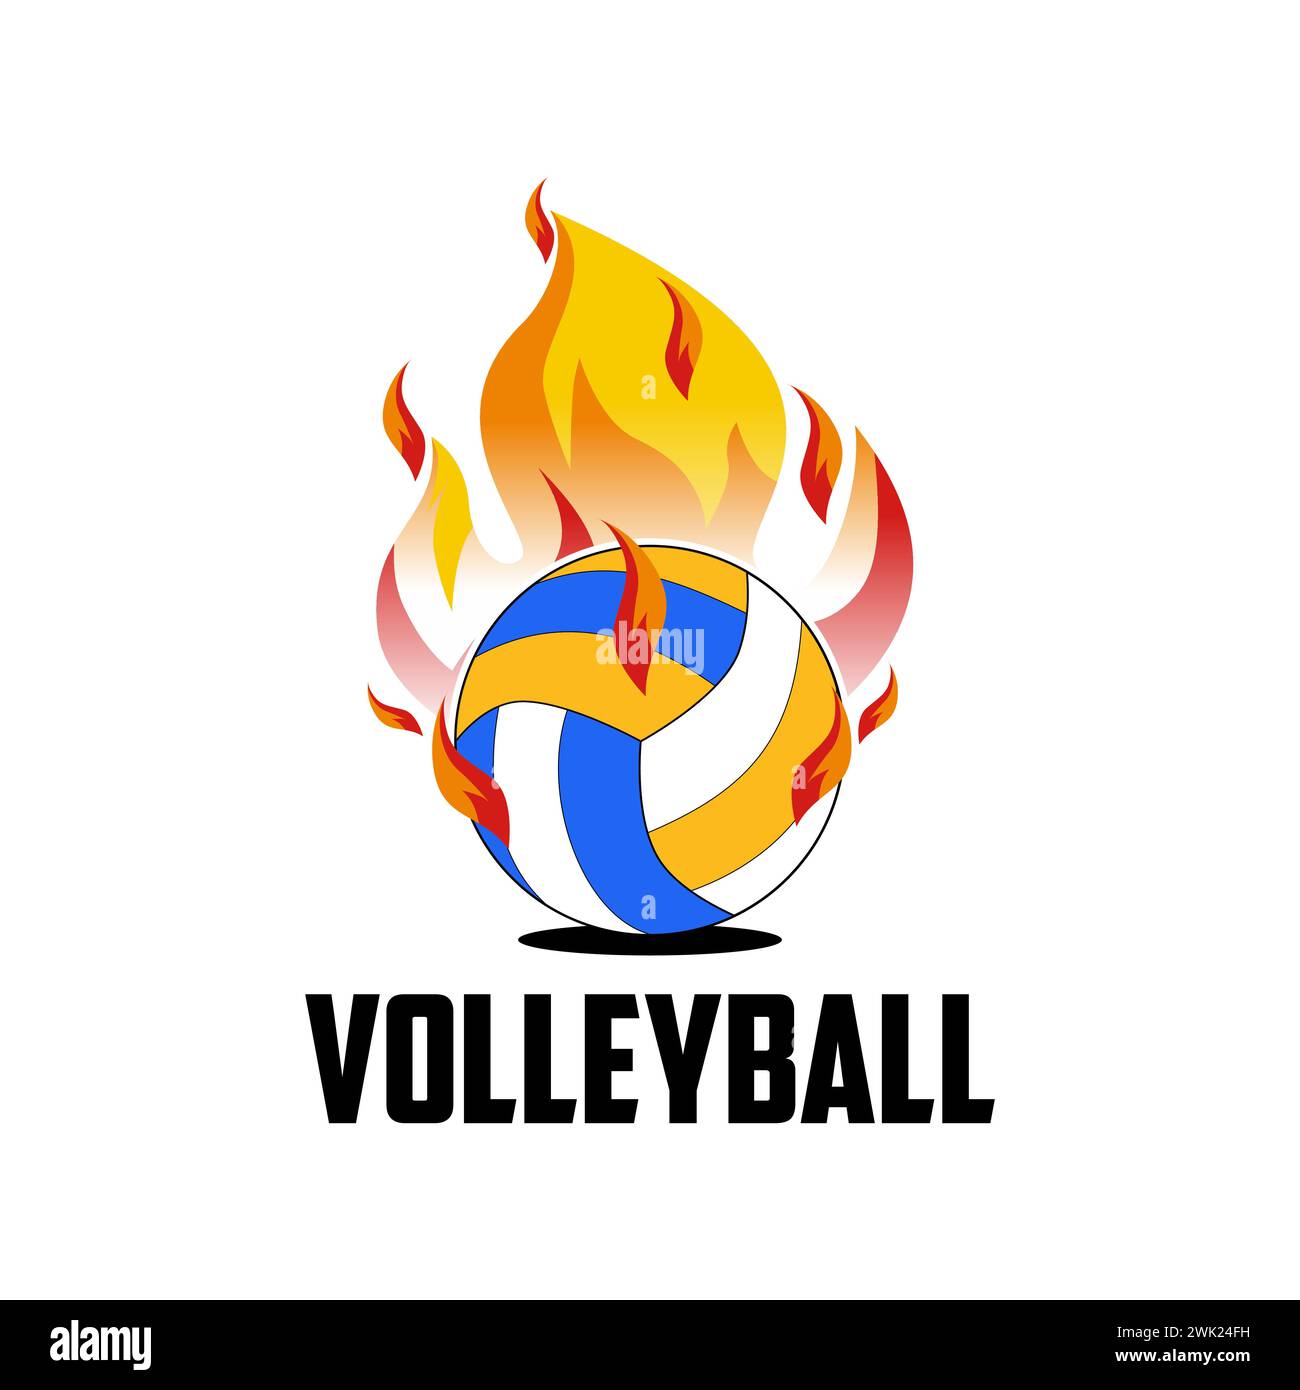 Volleyball on fire sport logo vector design Stock Vector